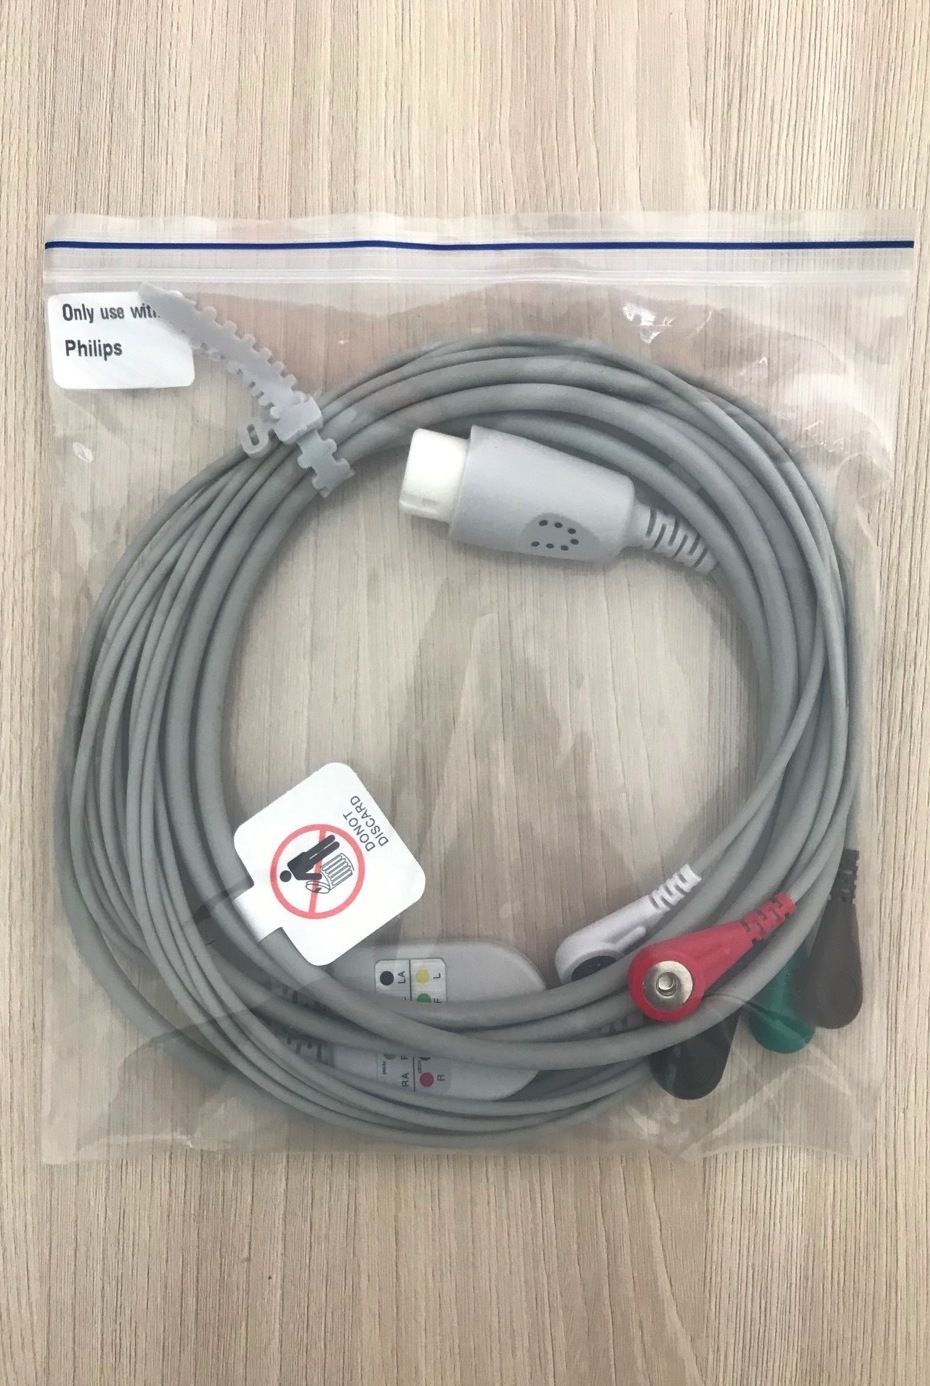 ECG 5 lead wires cable snap AHA for Philips Monitor & Philips Defibrillator_สายอีซีจีแบบ 5 ลีด ปลายกระดุมสำหรับเครื่องมอนิเตอร์และดีฟิบริลเลเตอร์ ฟิลิปส์